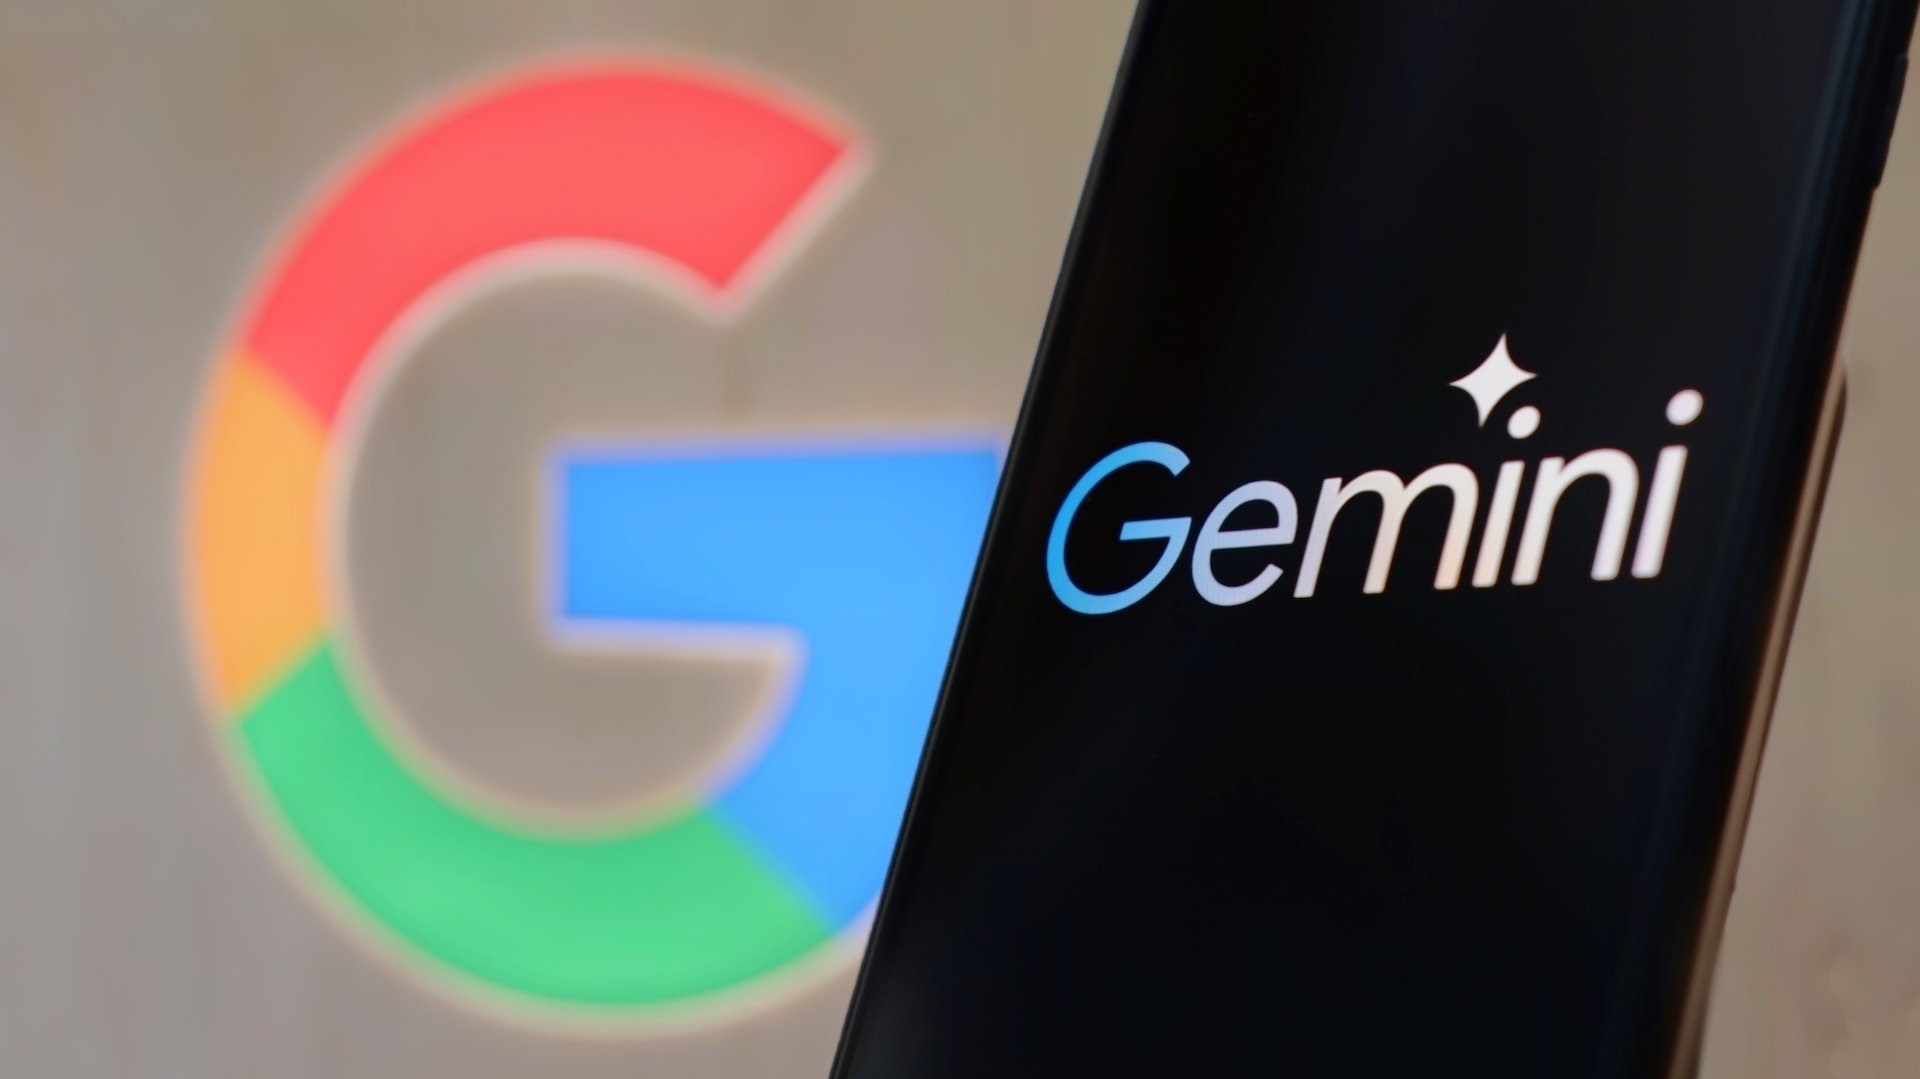 How to Fact Check Google’s Gemini AI